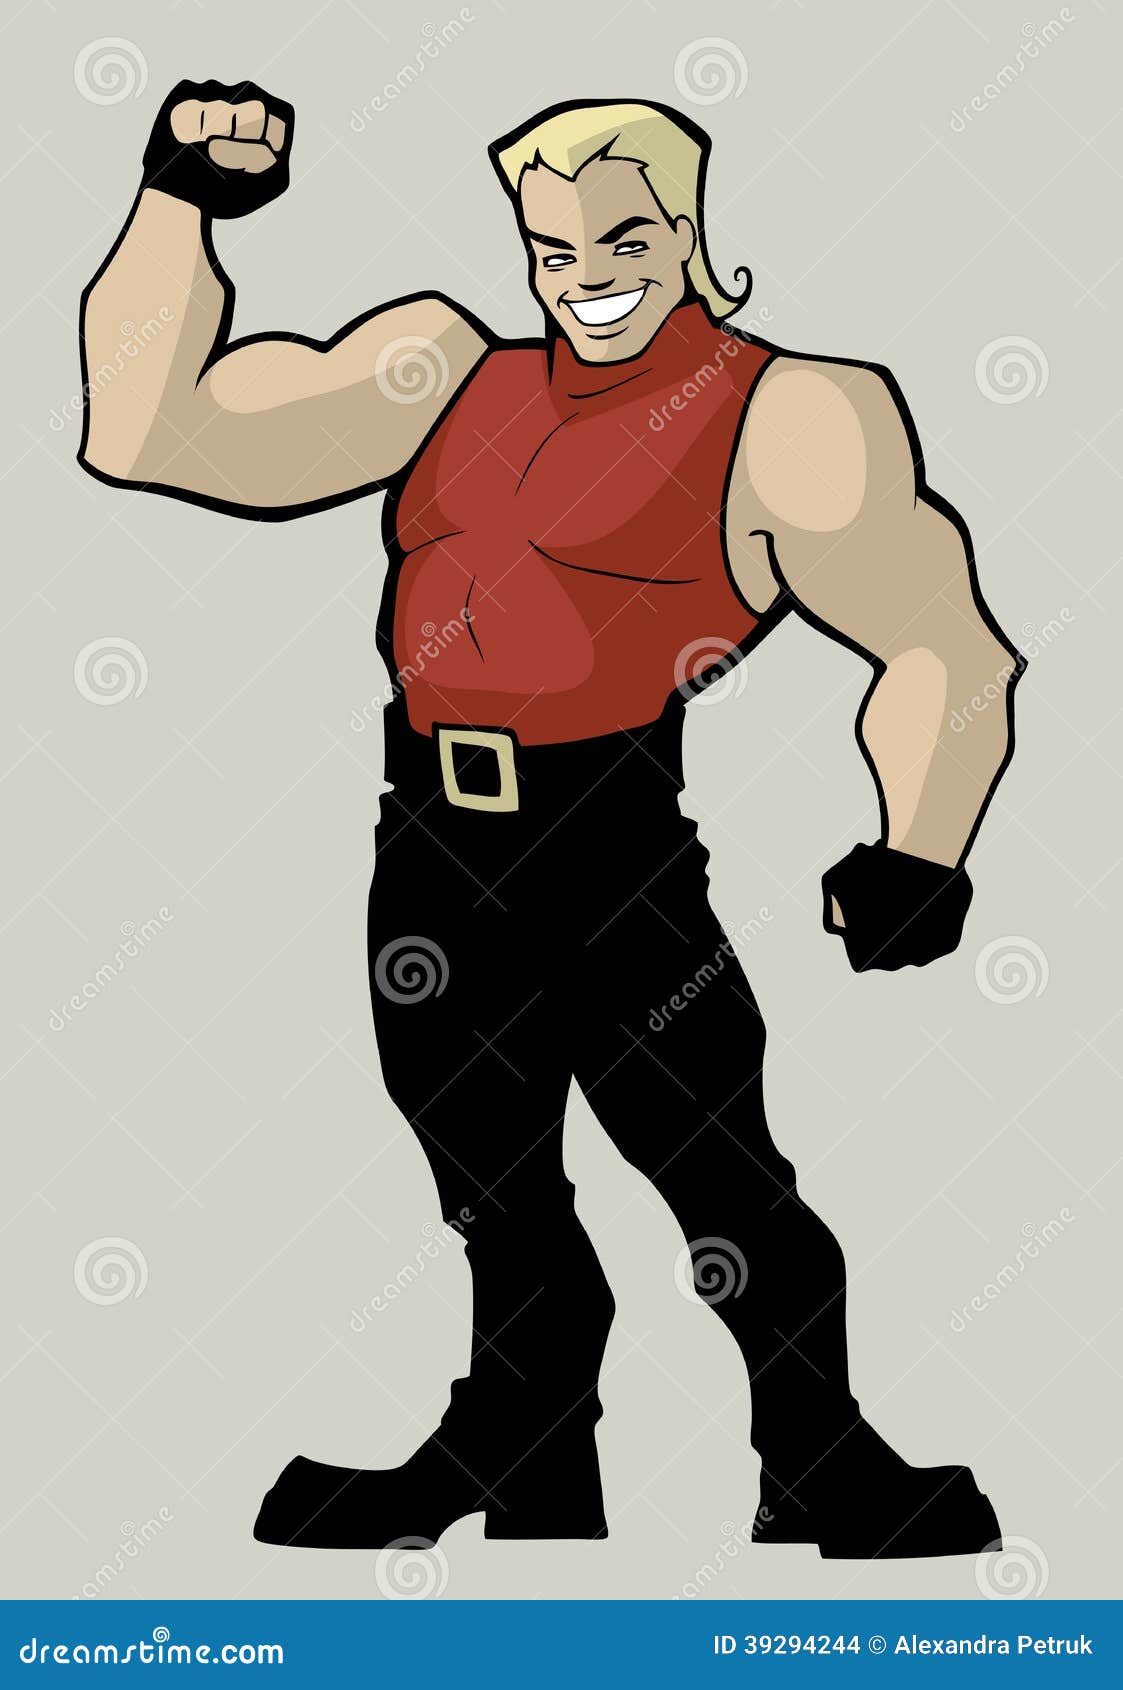 Strong guy stock vector. Illustration of muscular, cartoon - 39294244